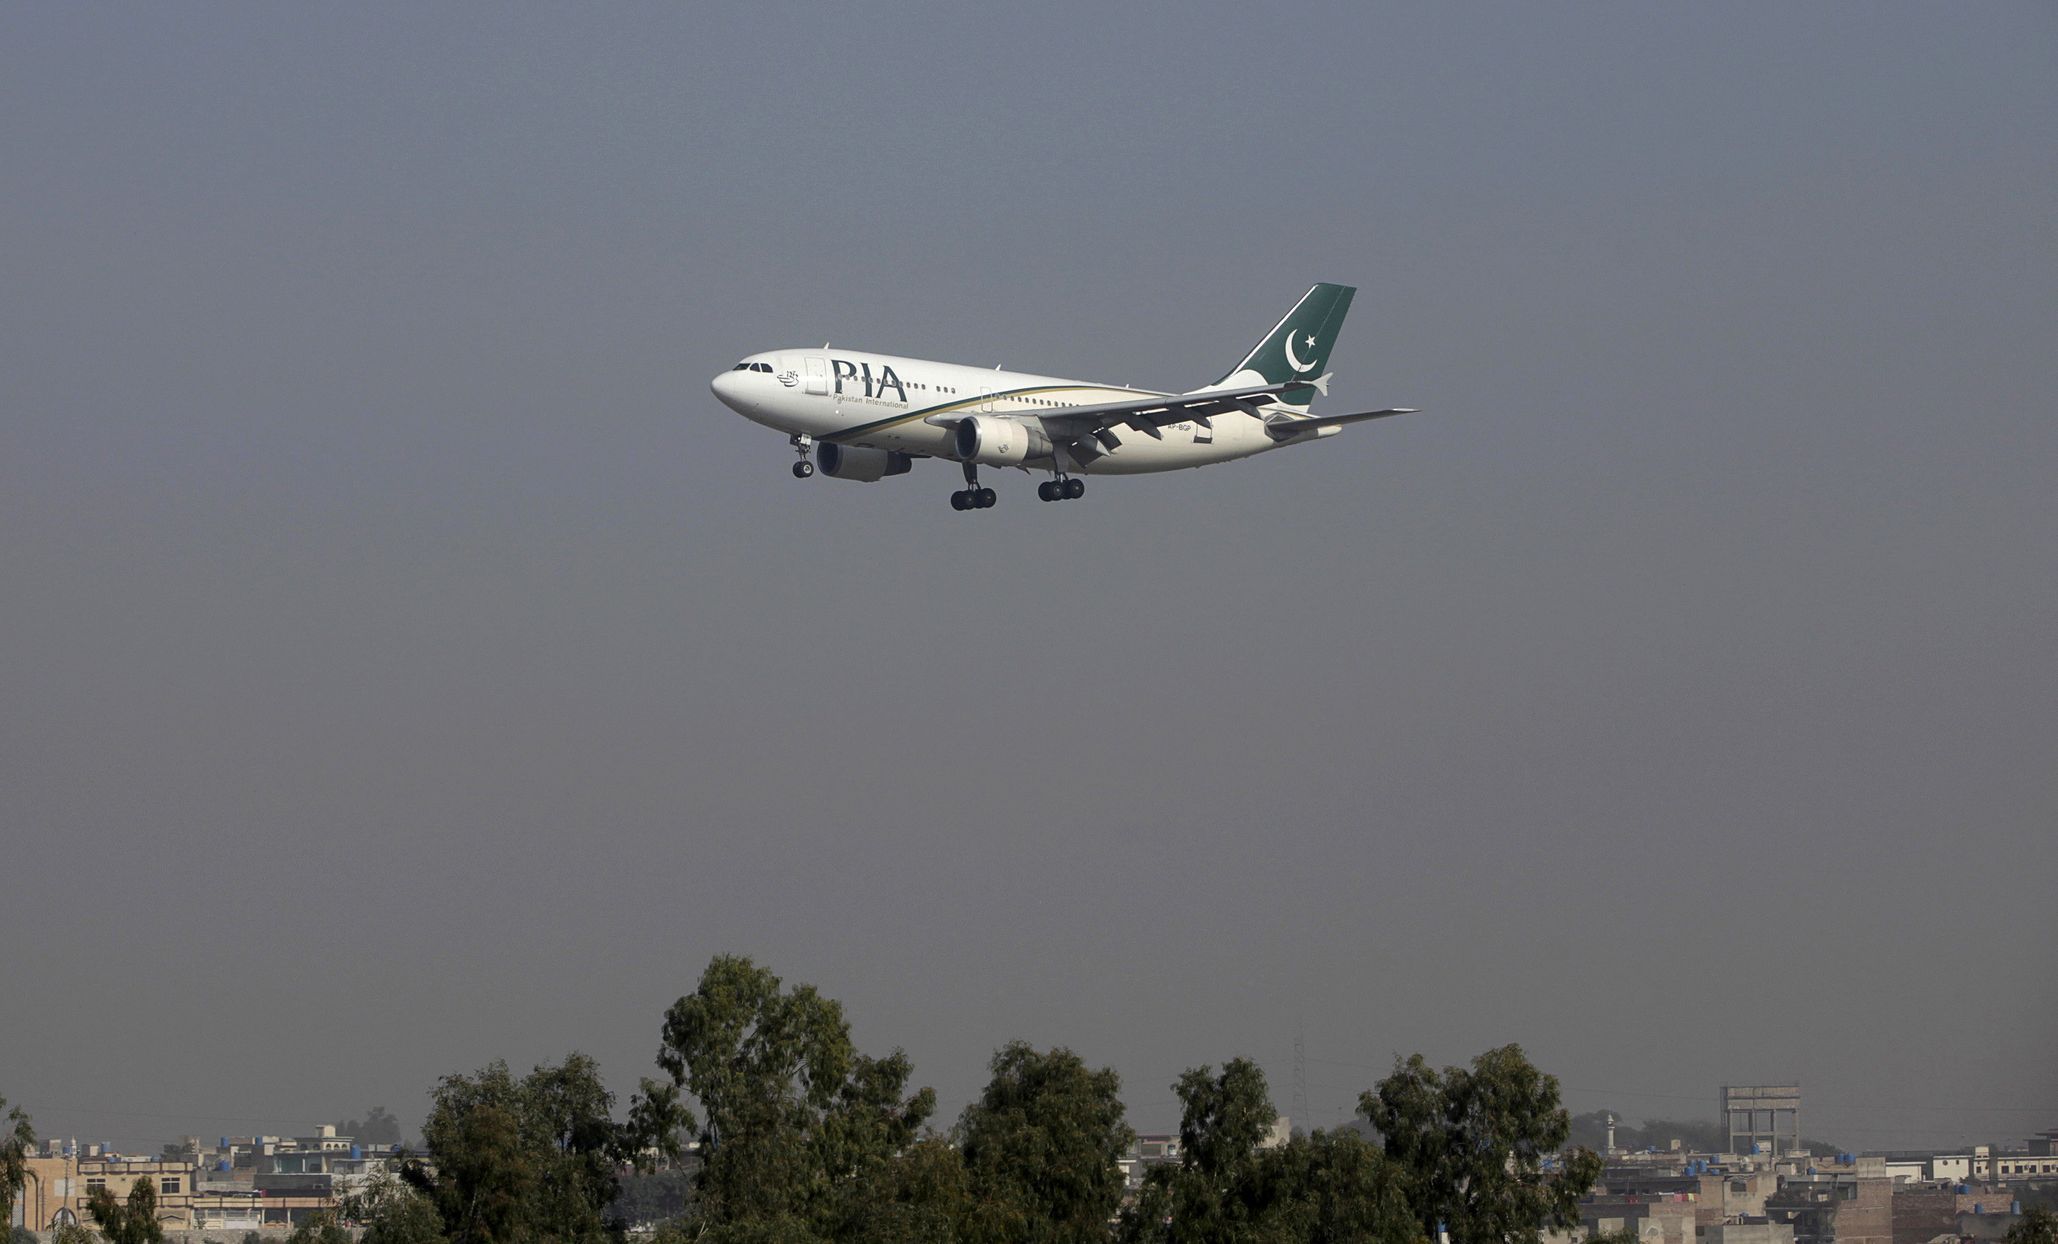 Ilustrační foto letadla Pakistan International Airlines (PIA).